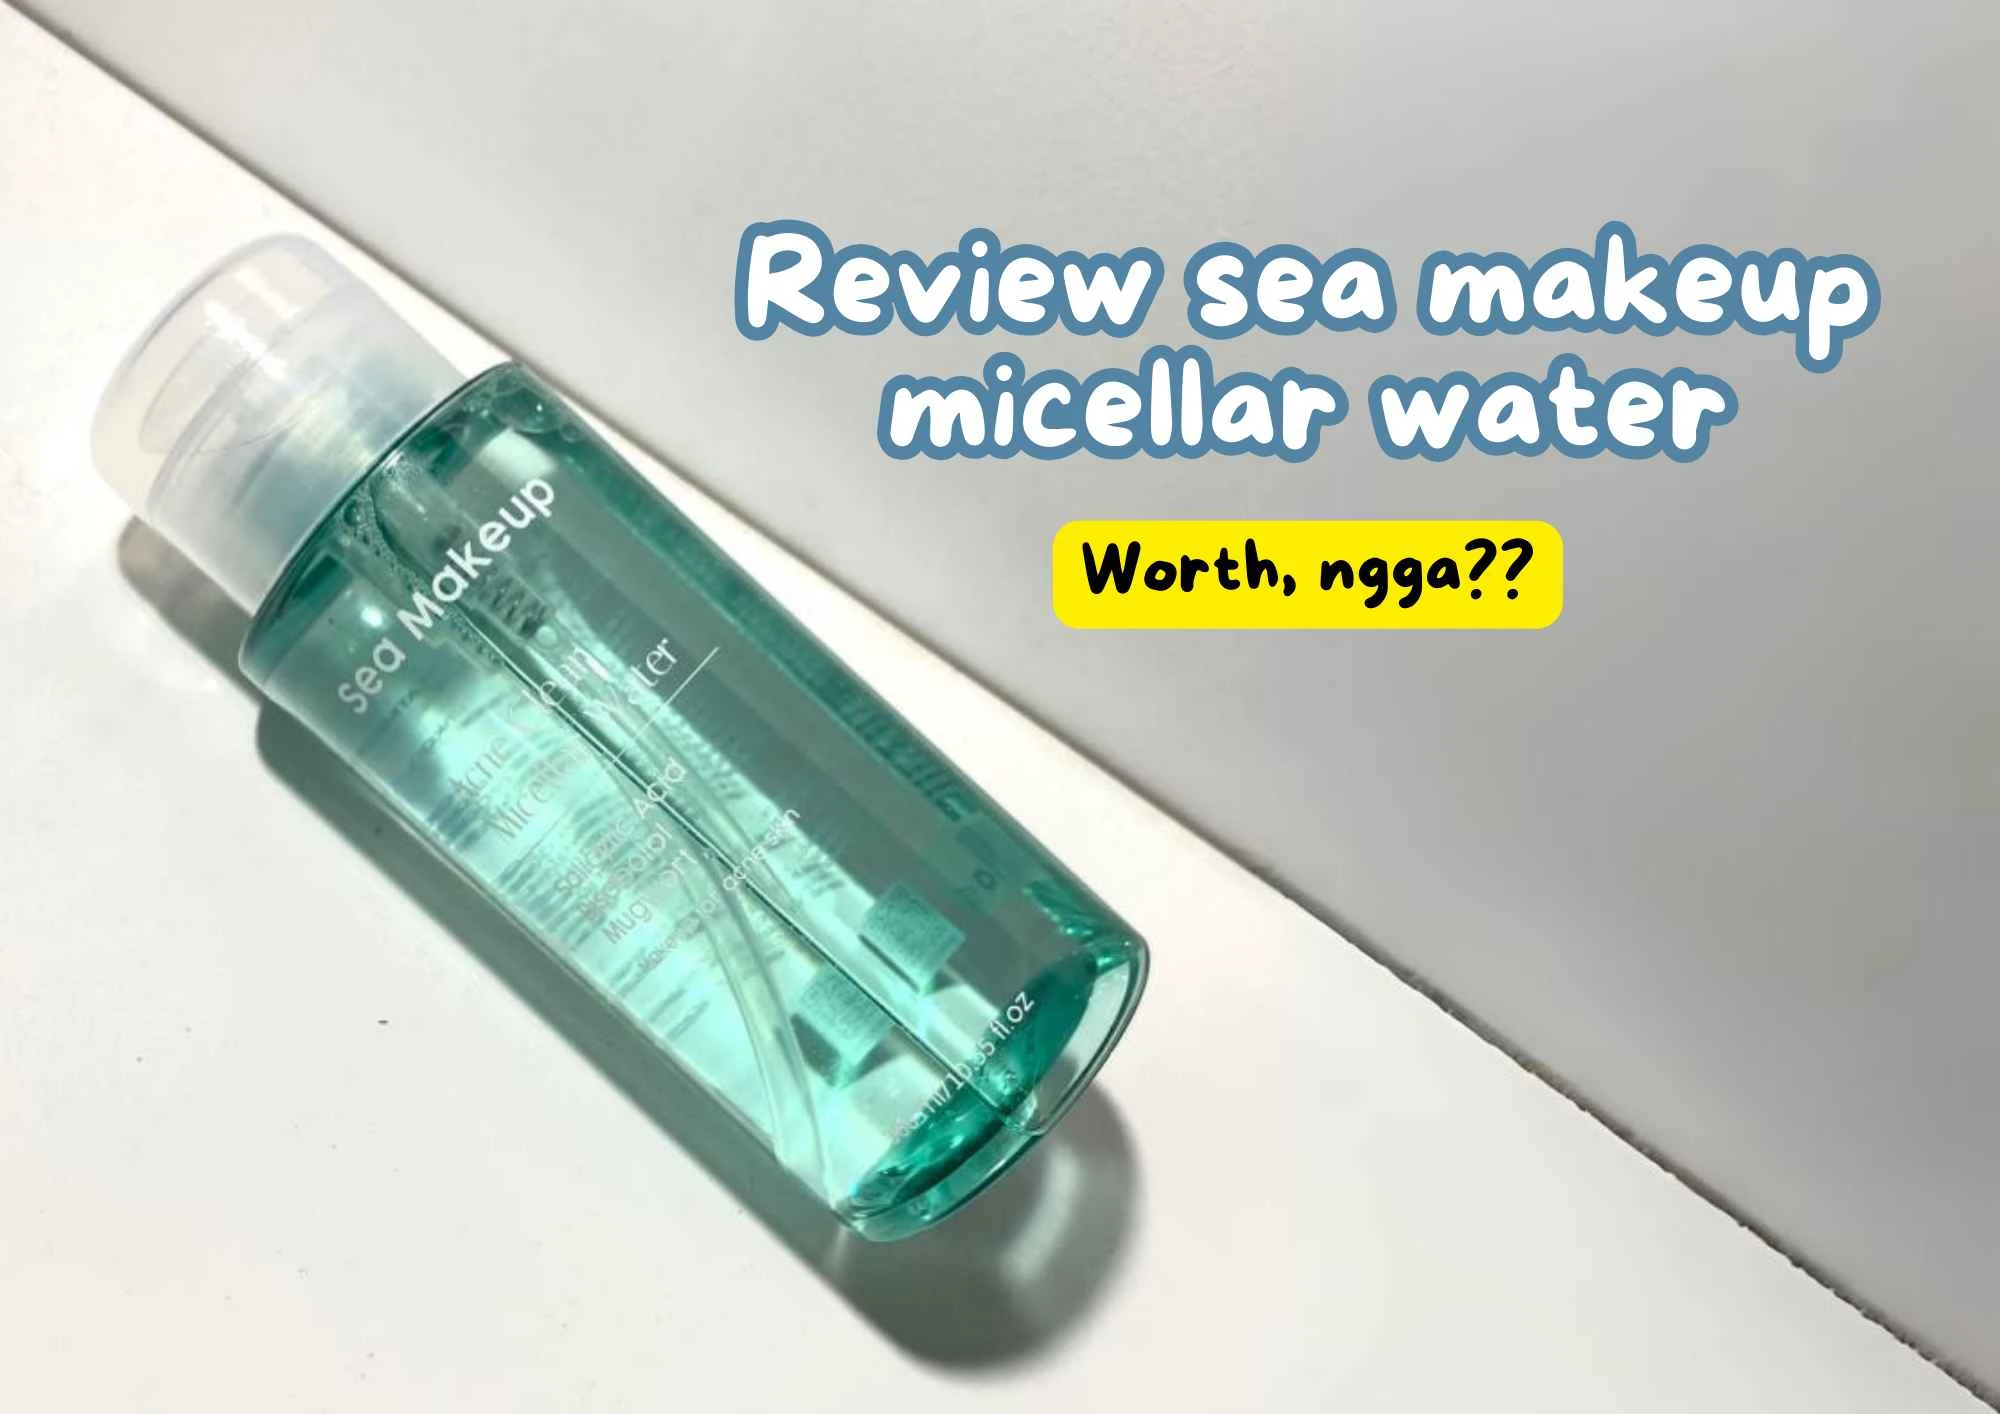 Sea makeup micellar water